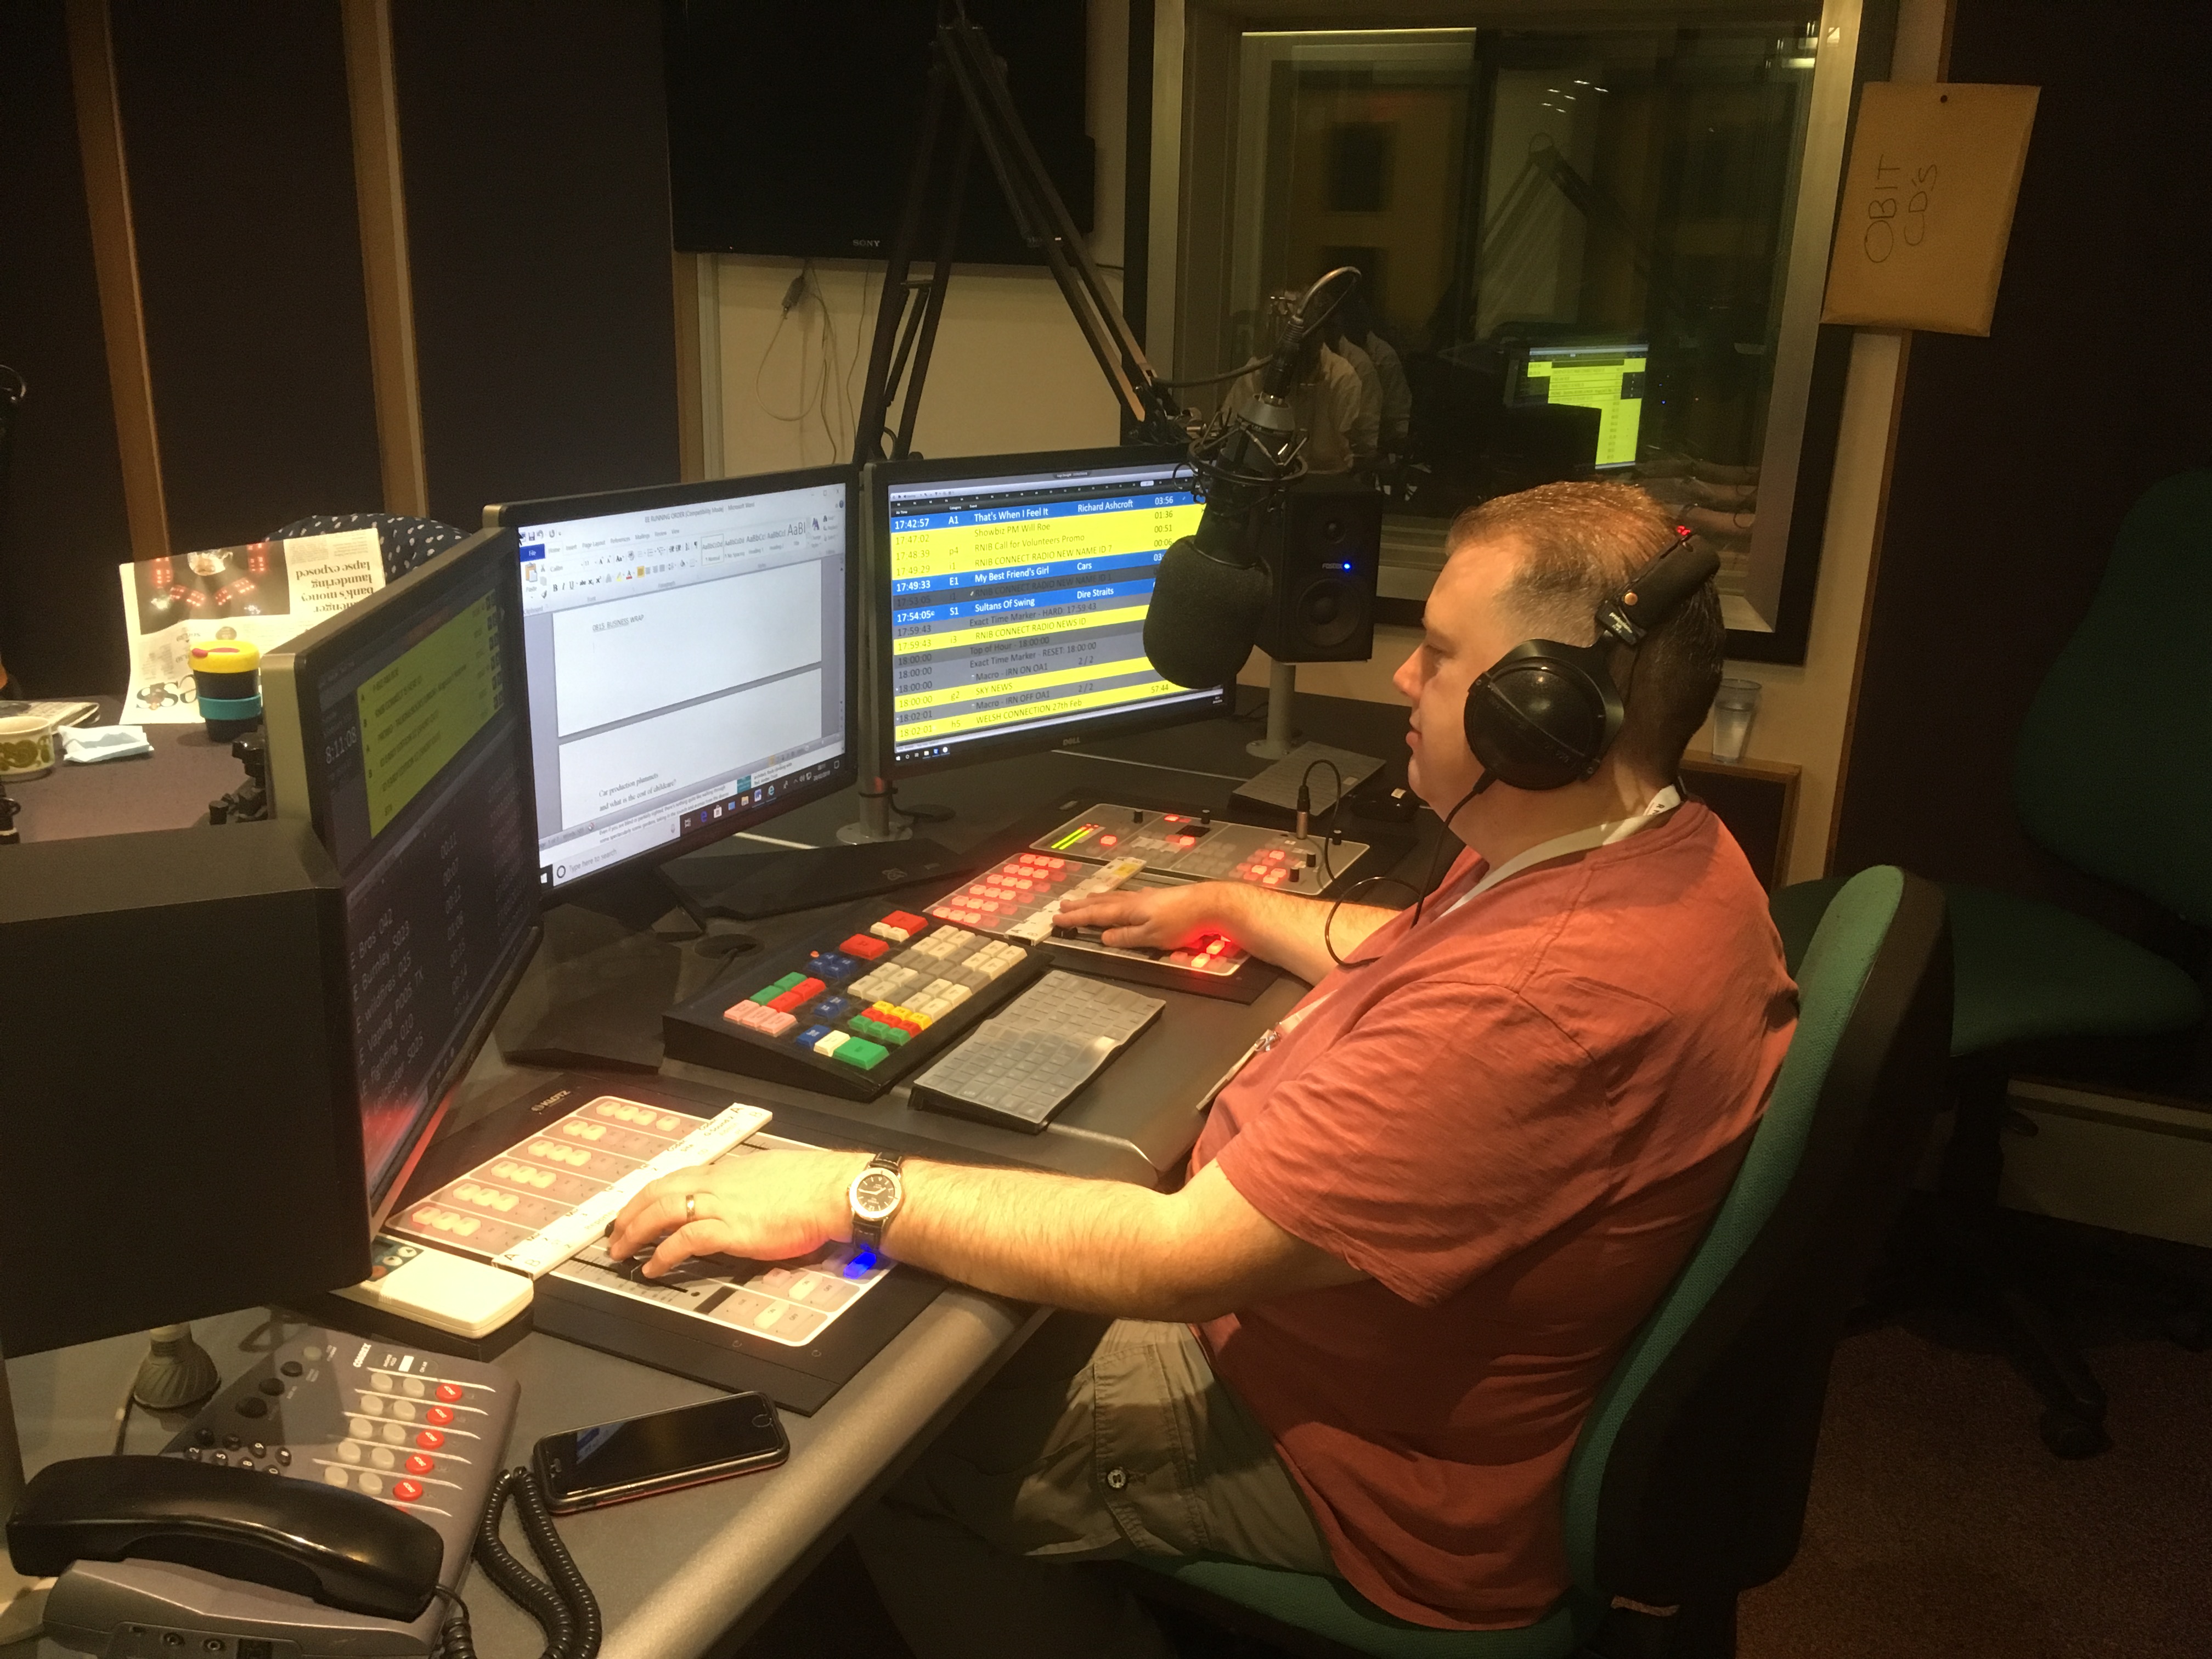 Allan inside the RNIB studio surrounded by equipment wearing headphones